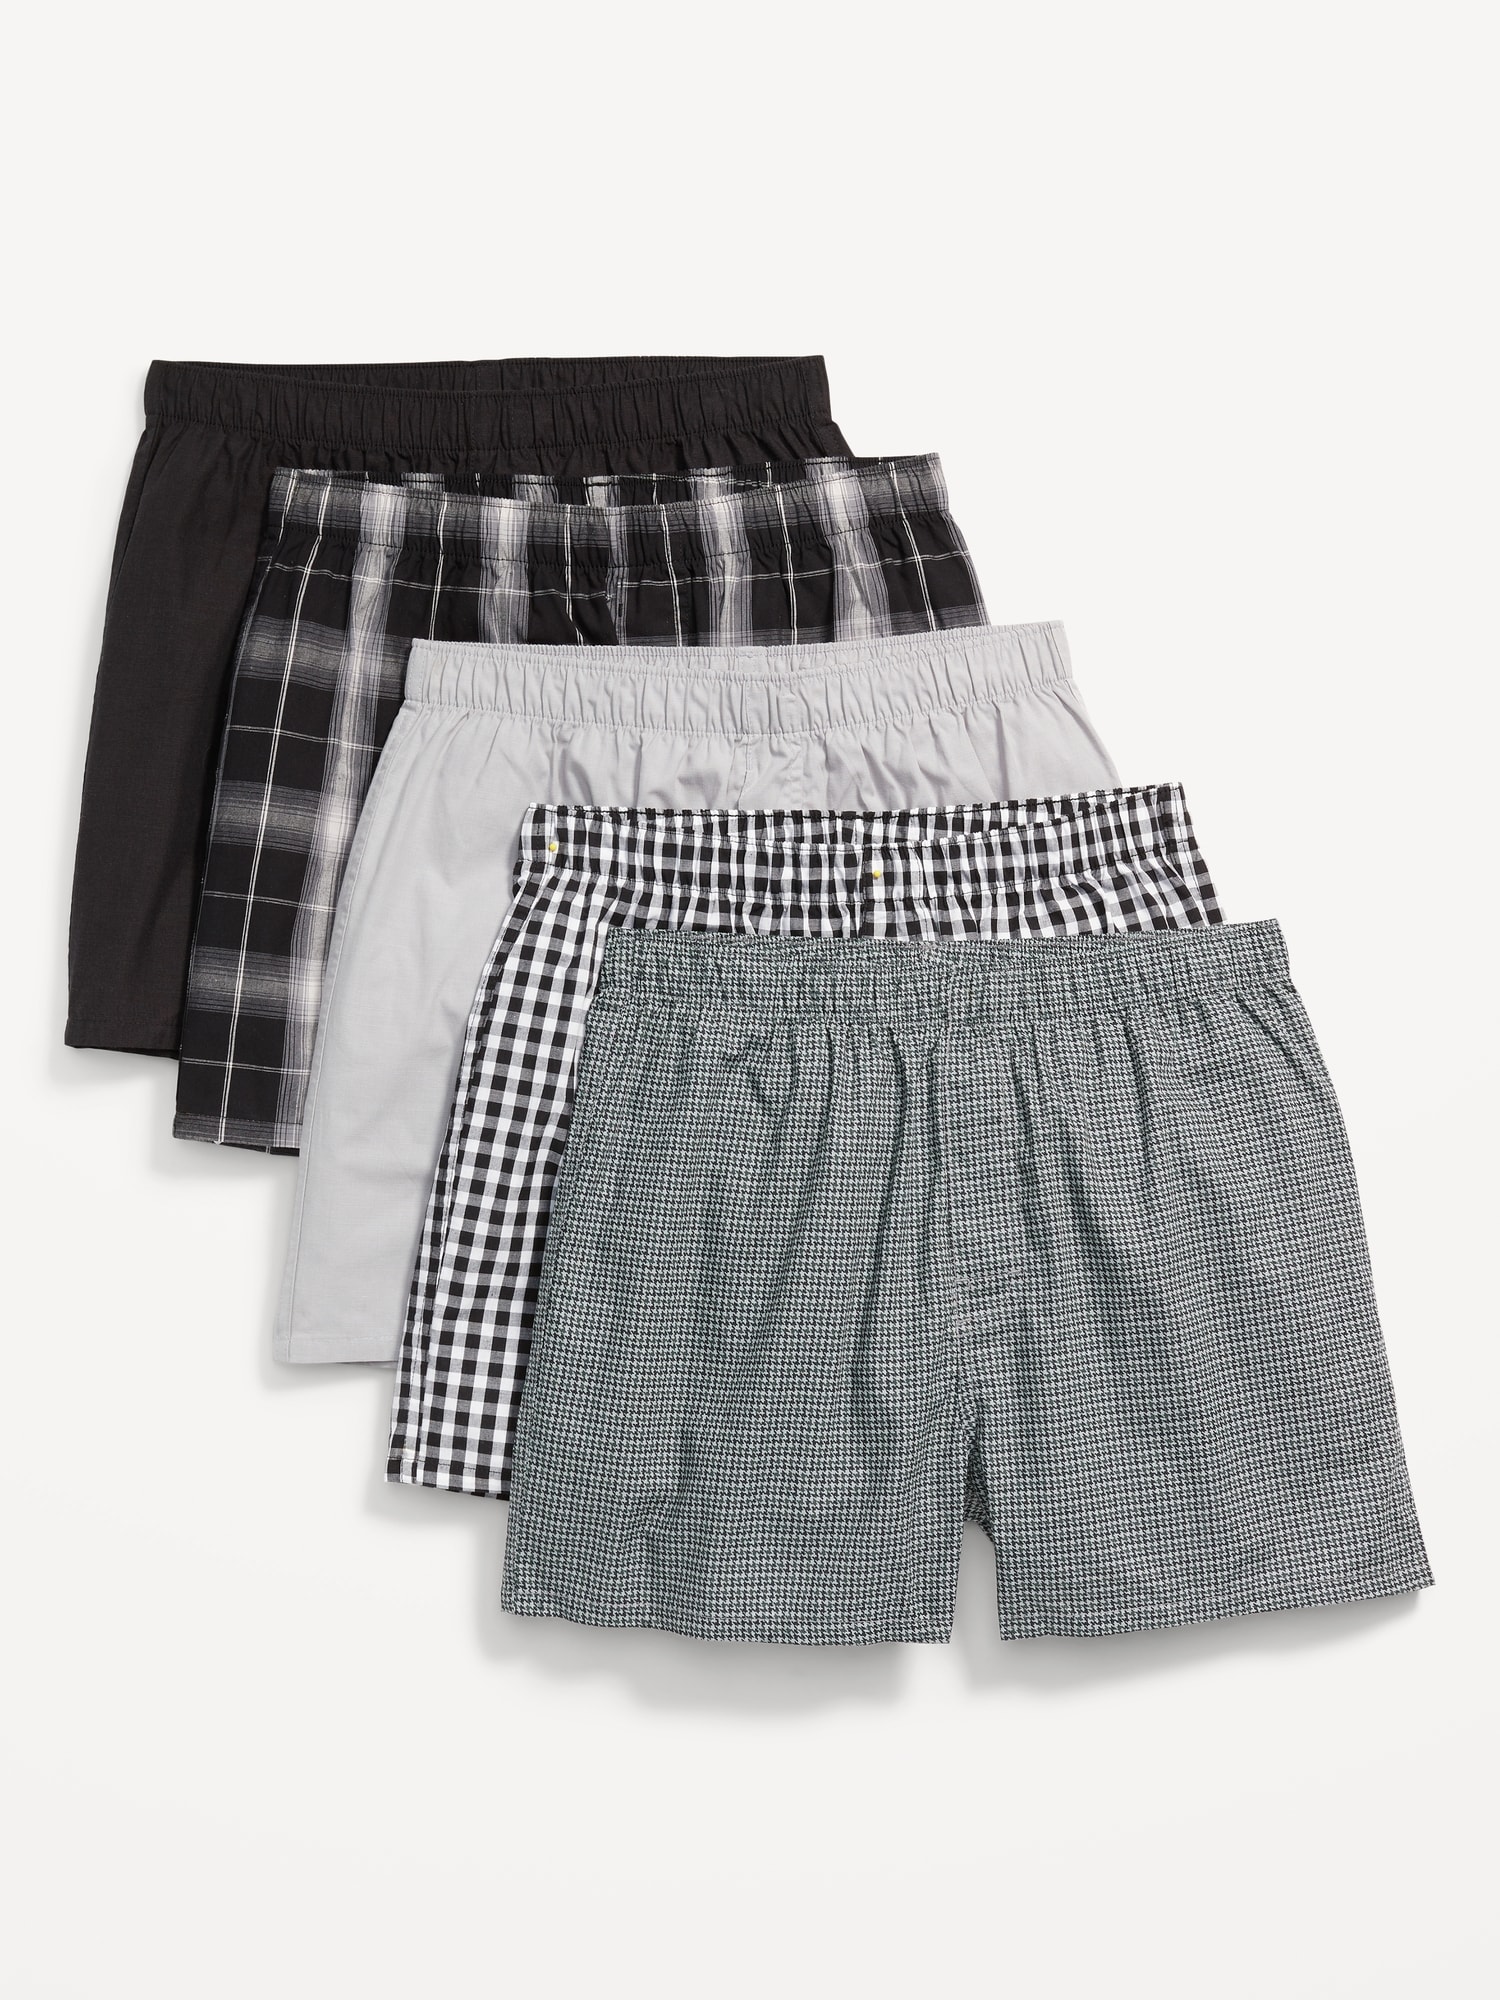 Boys Tesco Underwear Shorts 5 Pack Age 9,10